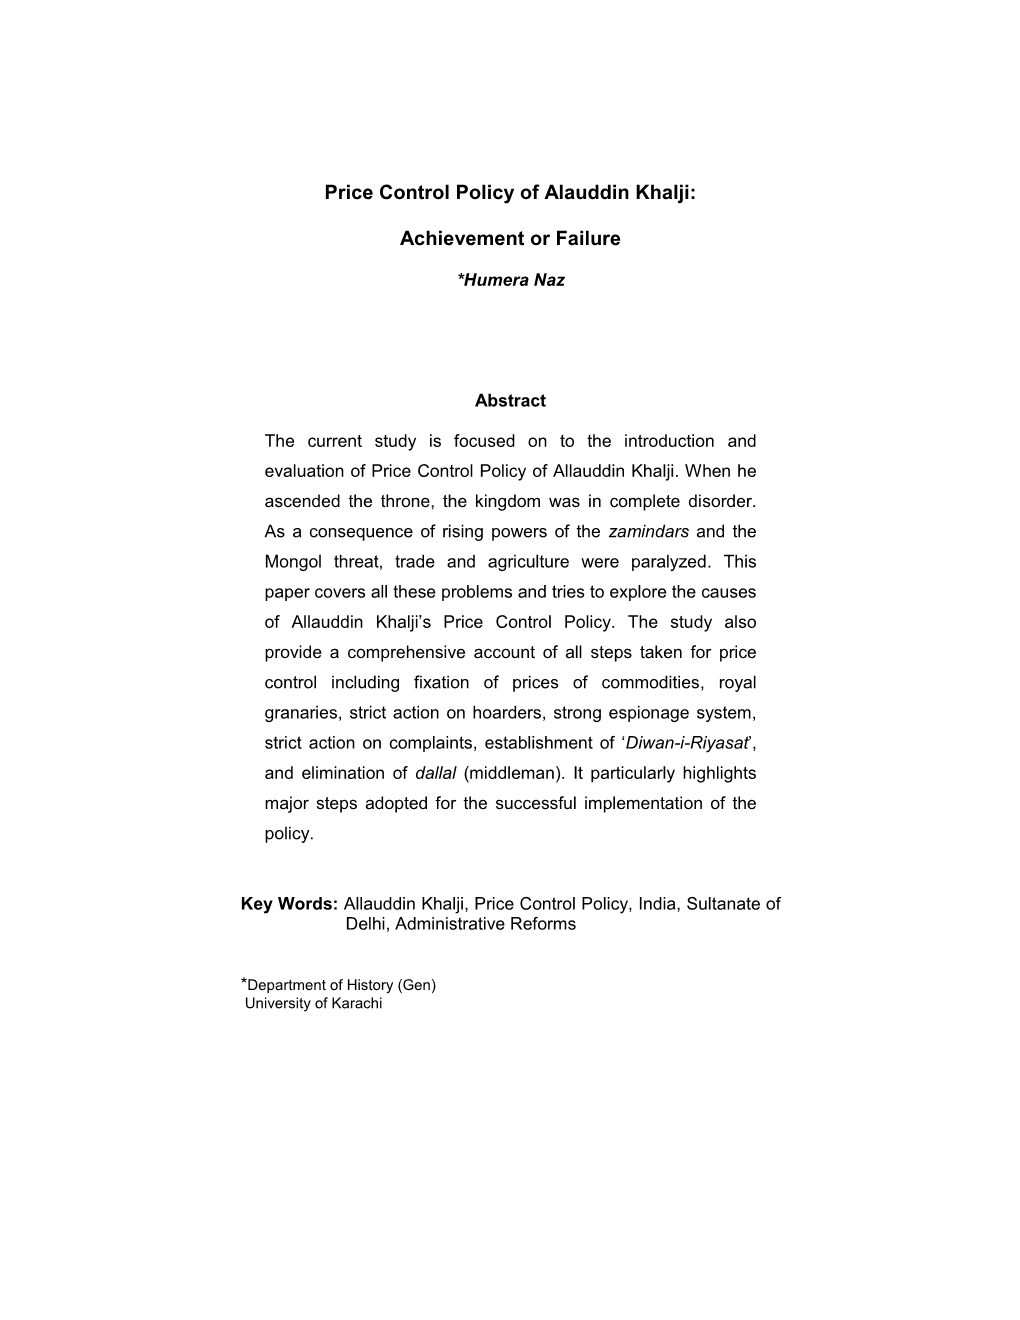 Price Control Policy of Alauddin Khalji: Achievement Or Failure